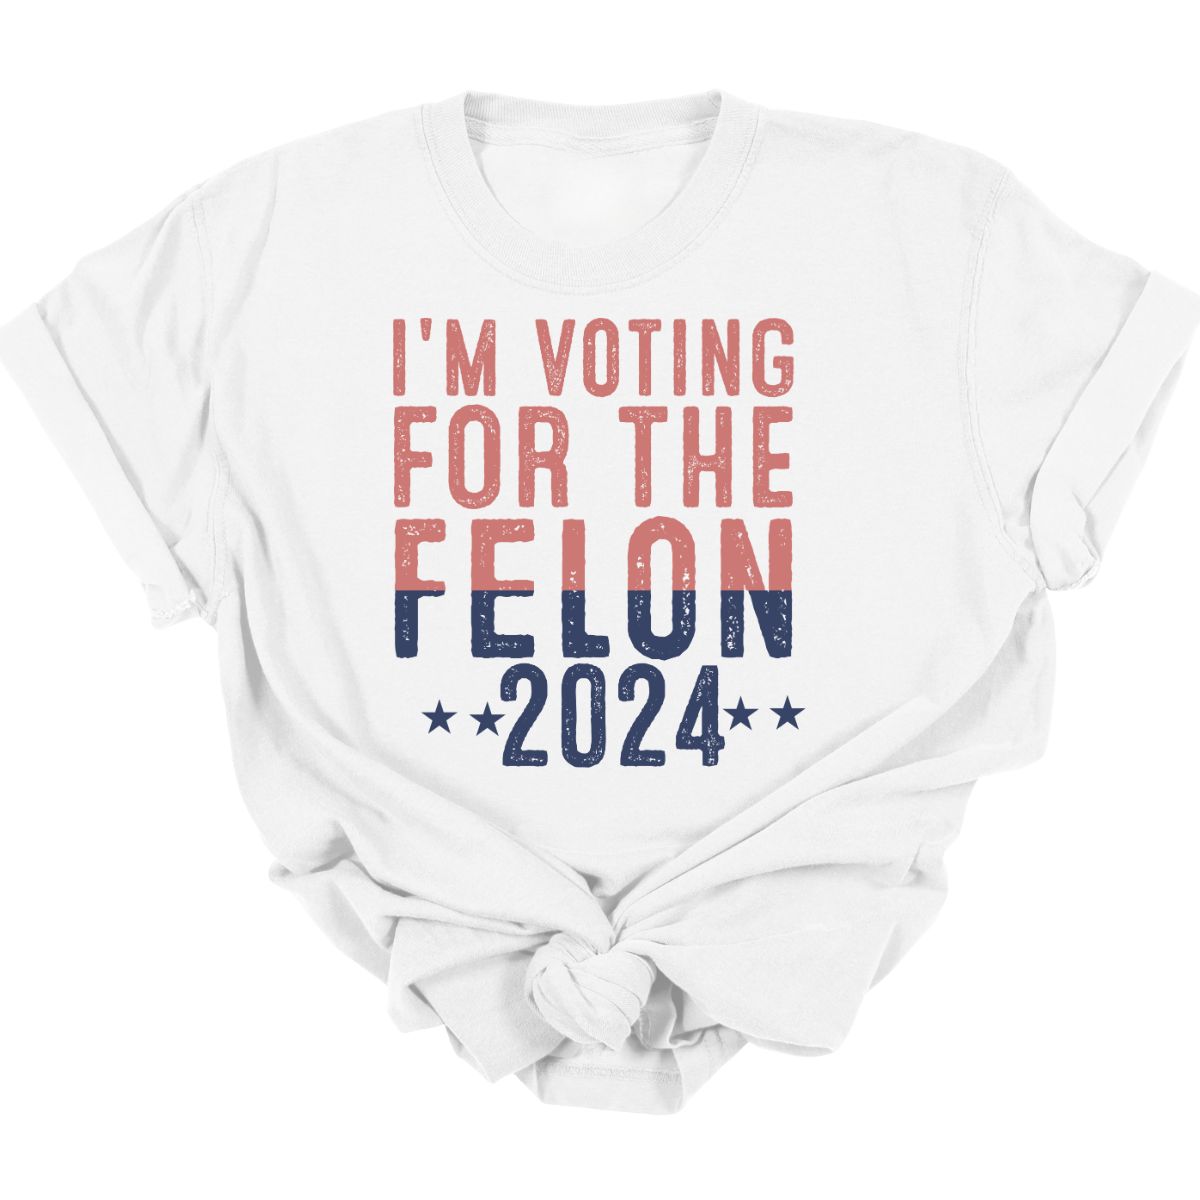 IM VOTING FOR THE FELON 2024 *TRUMP*